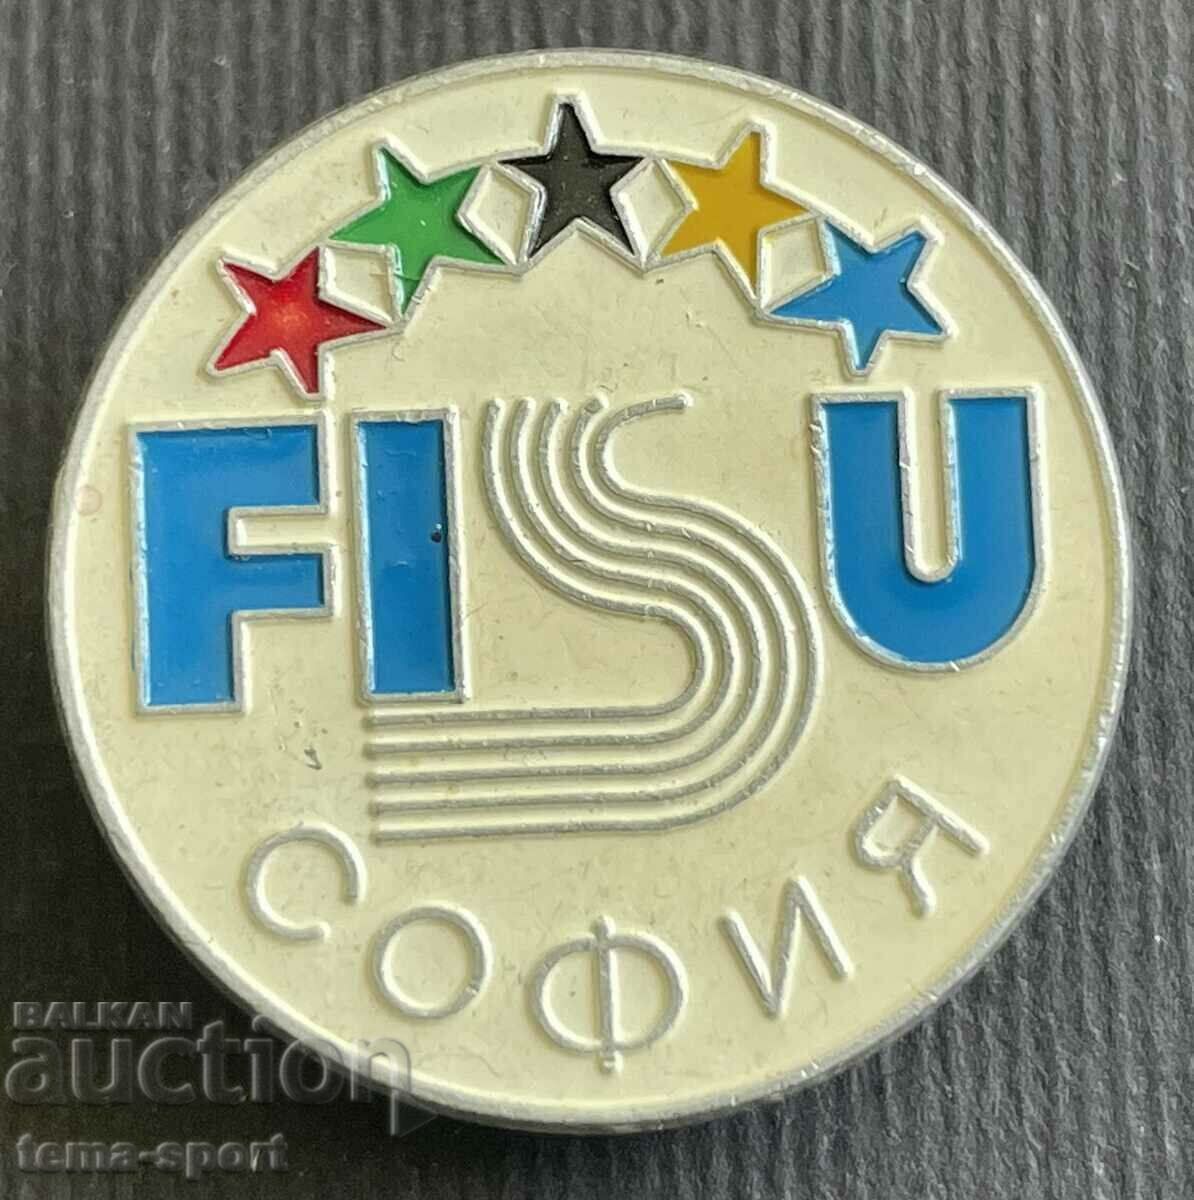 291 Bulgaria semnează FISU International University Sports